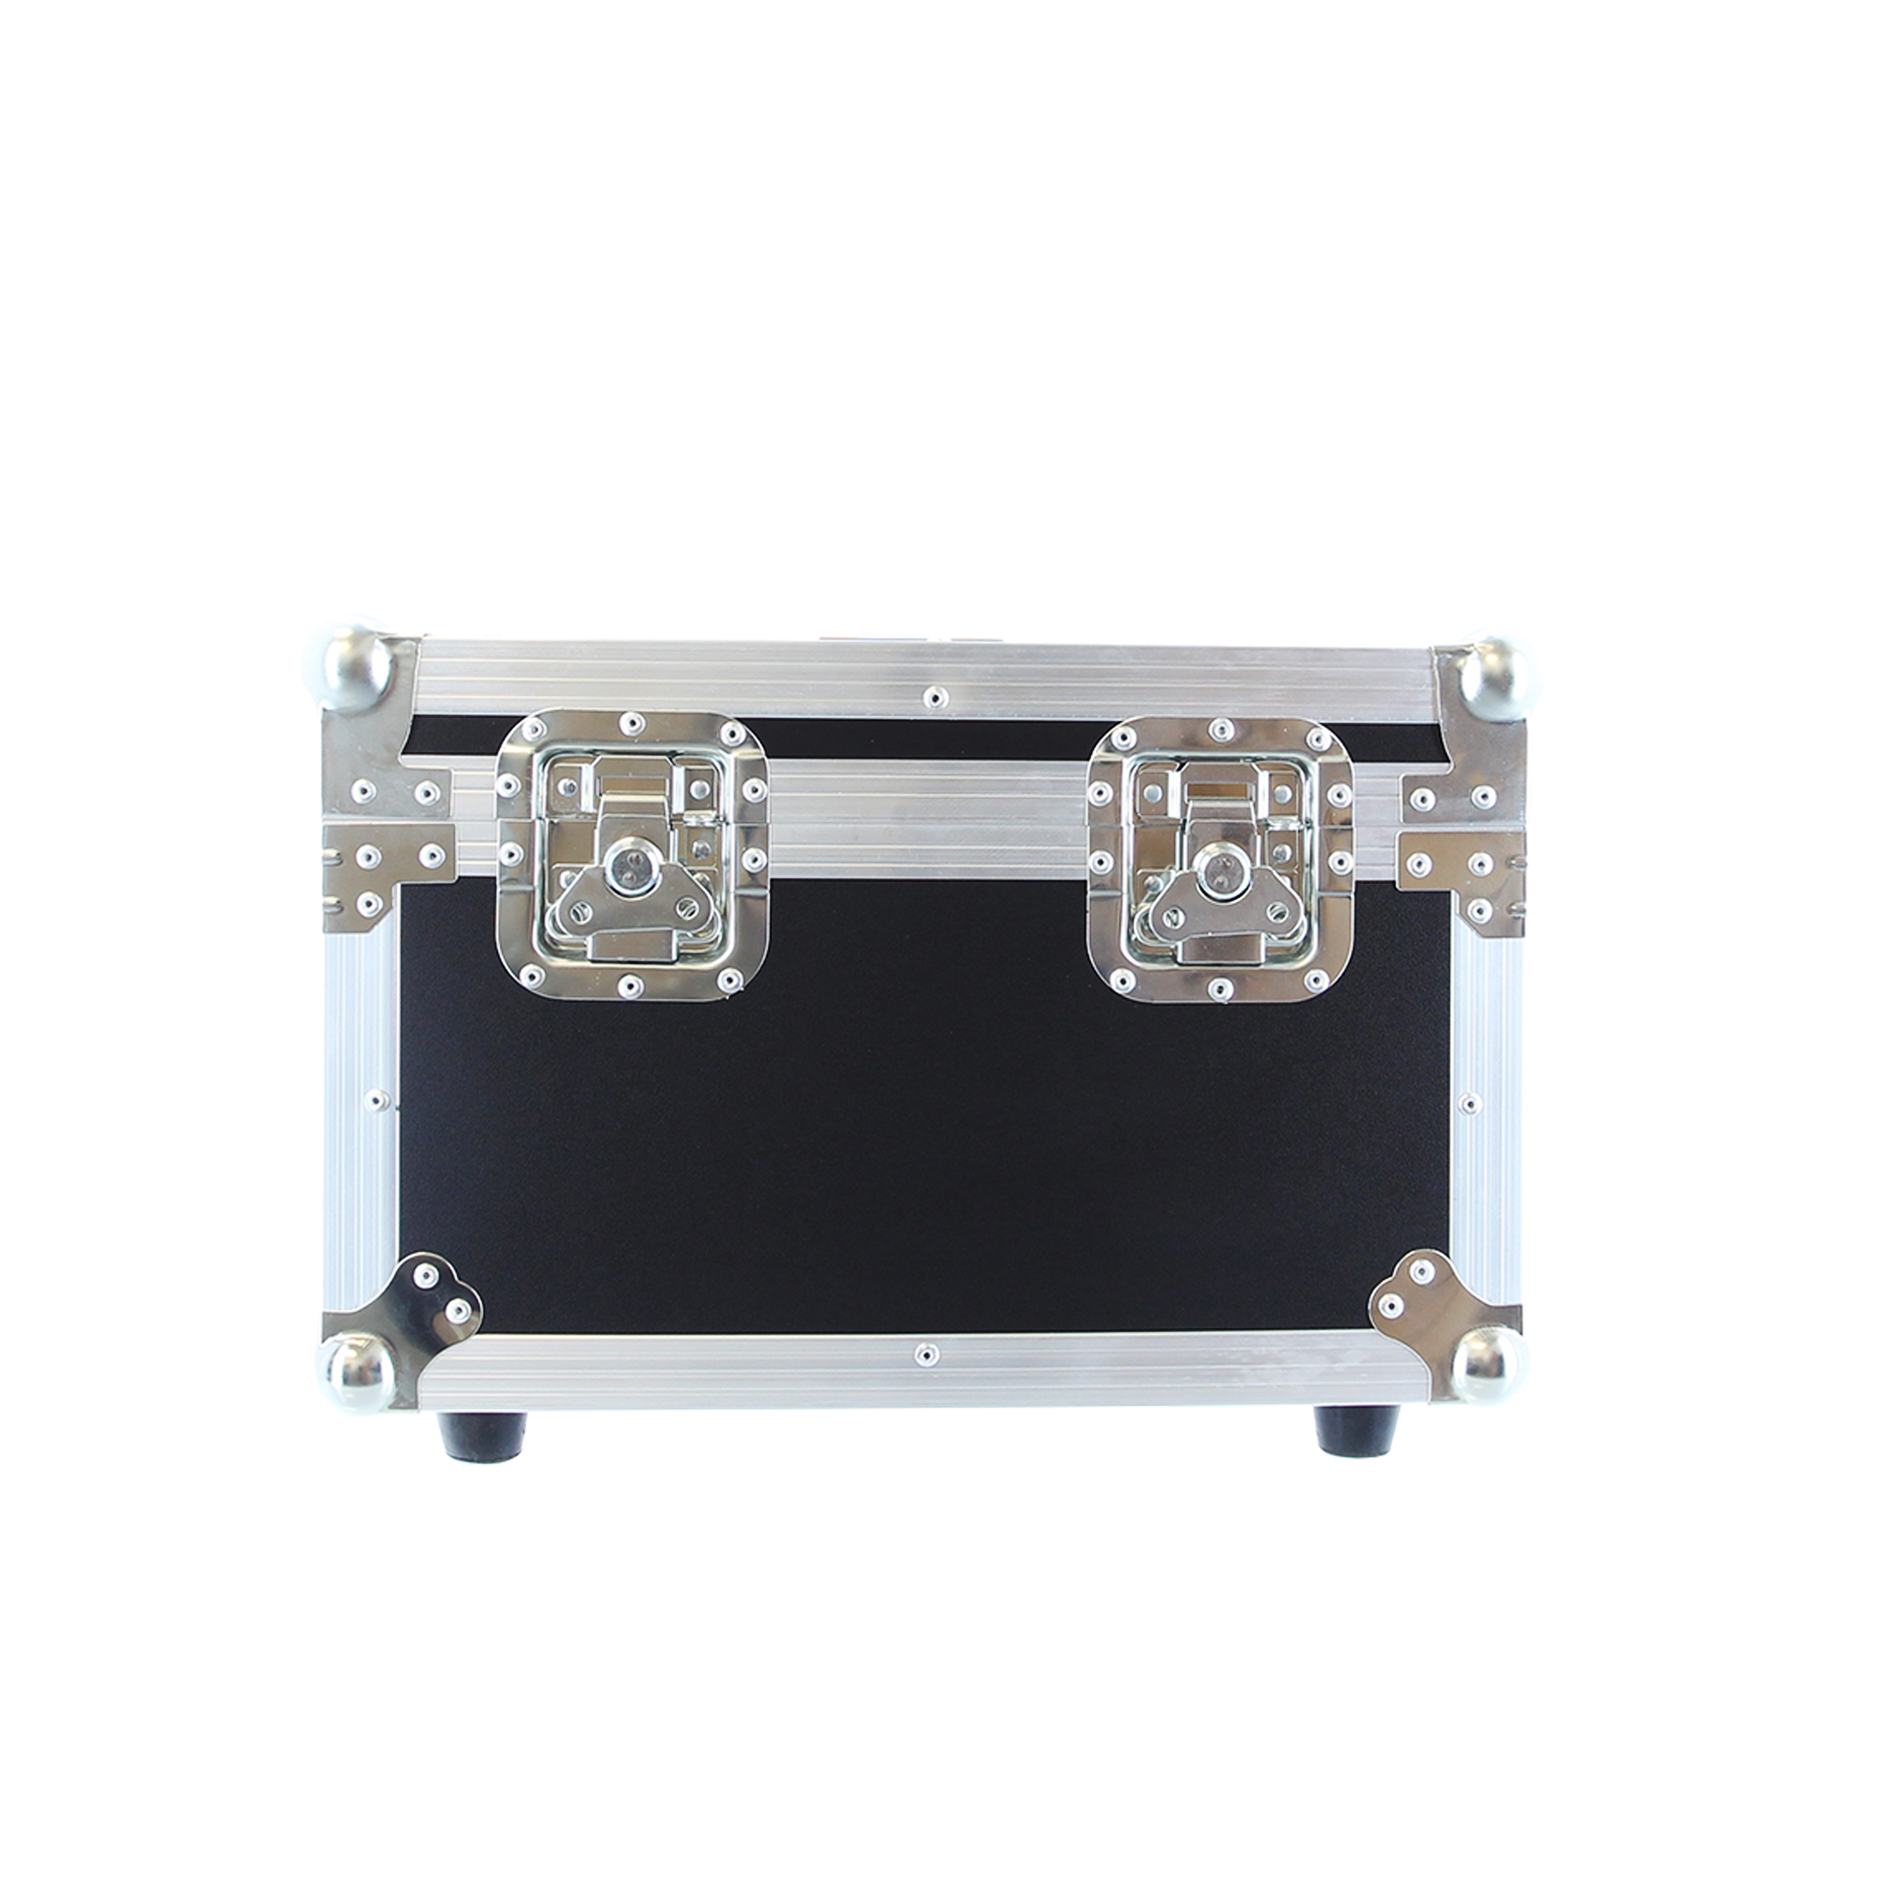 Power Acoustics Fc Komodo - Bag & flightcase for lighting equipment - Variation 3